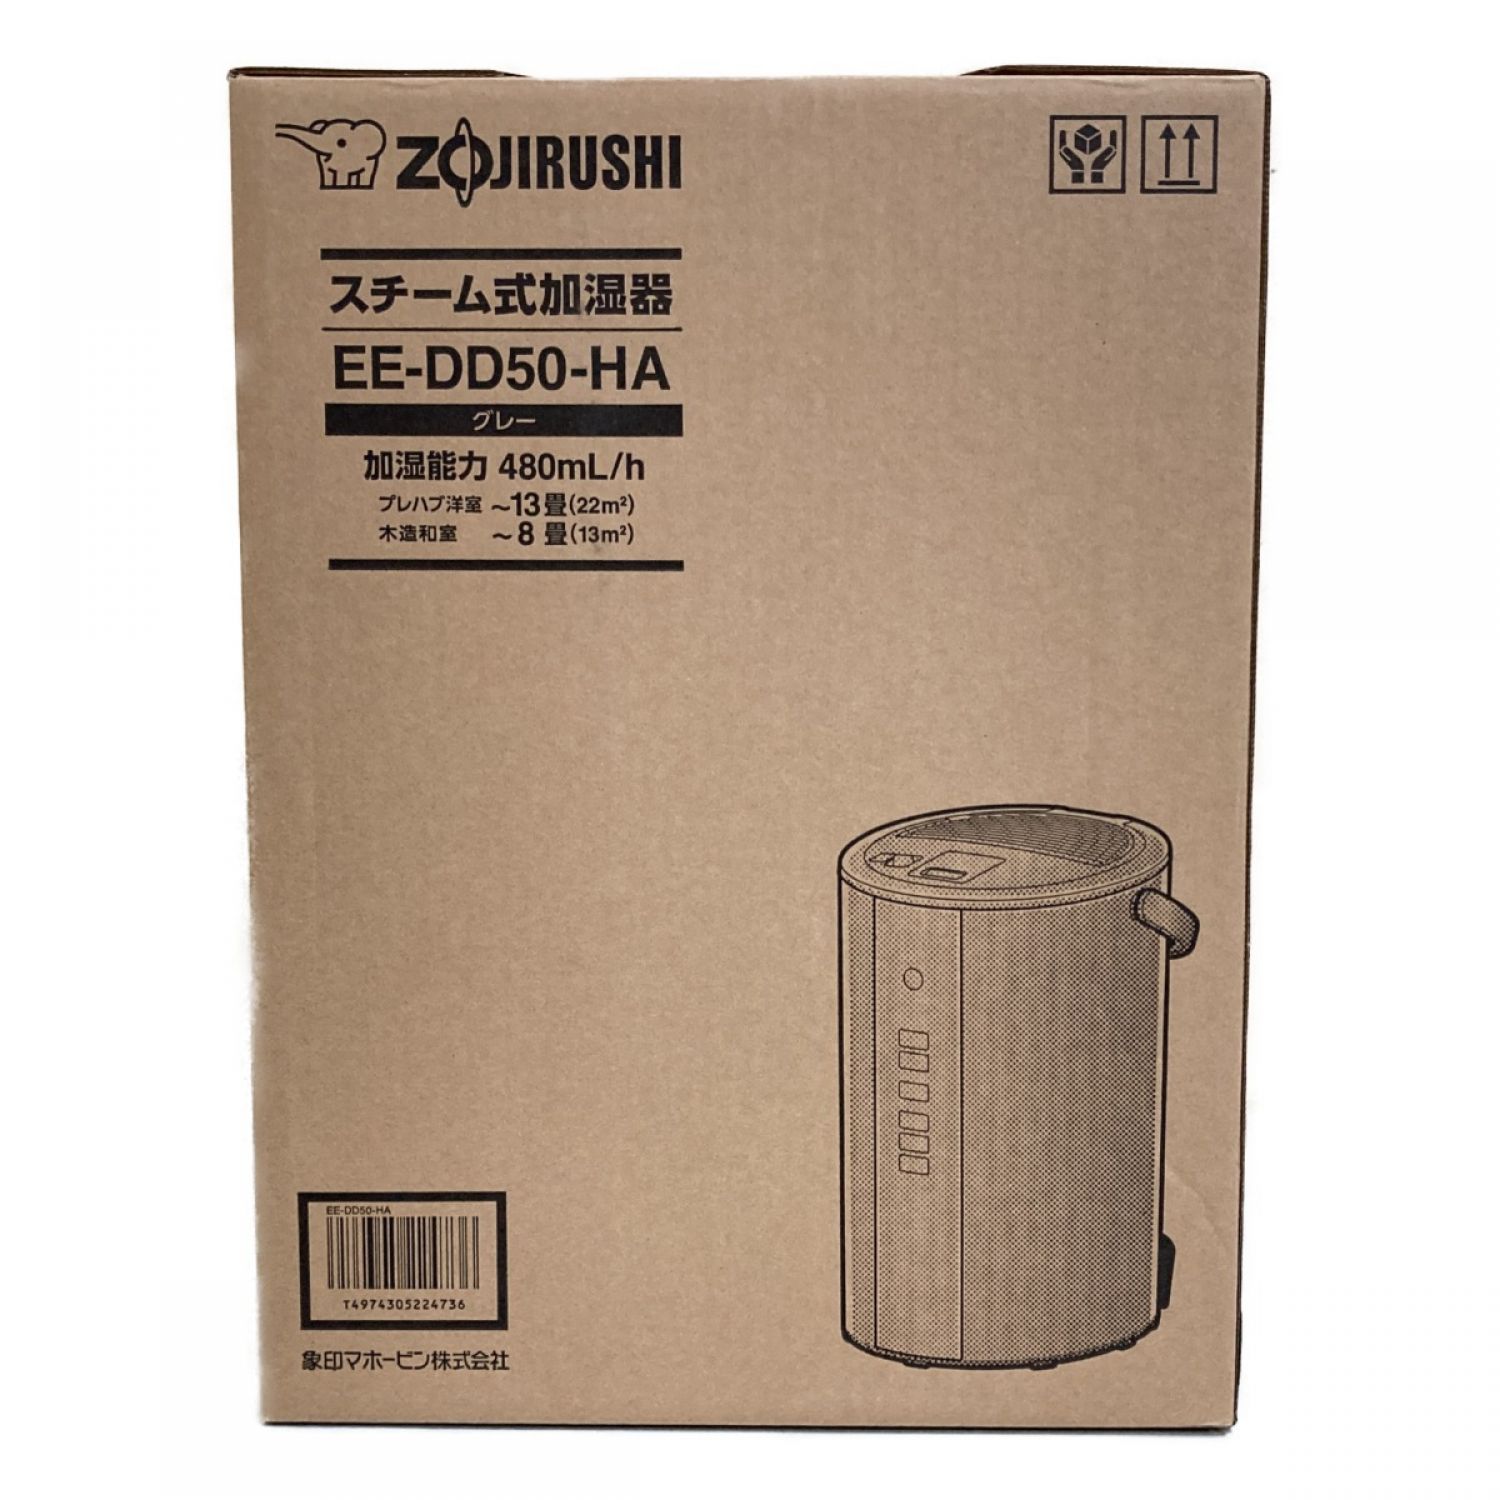 ☆ZOJIRUSHI 象印 EE-DD50-HA [グレー] - スマートフォン・タブレット